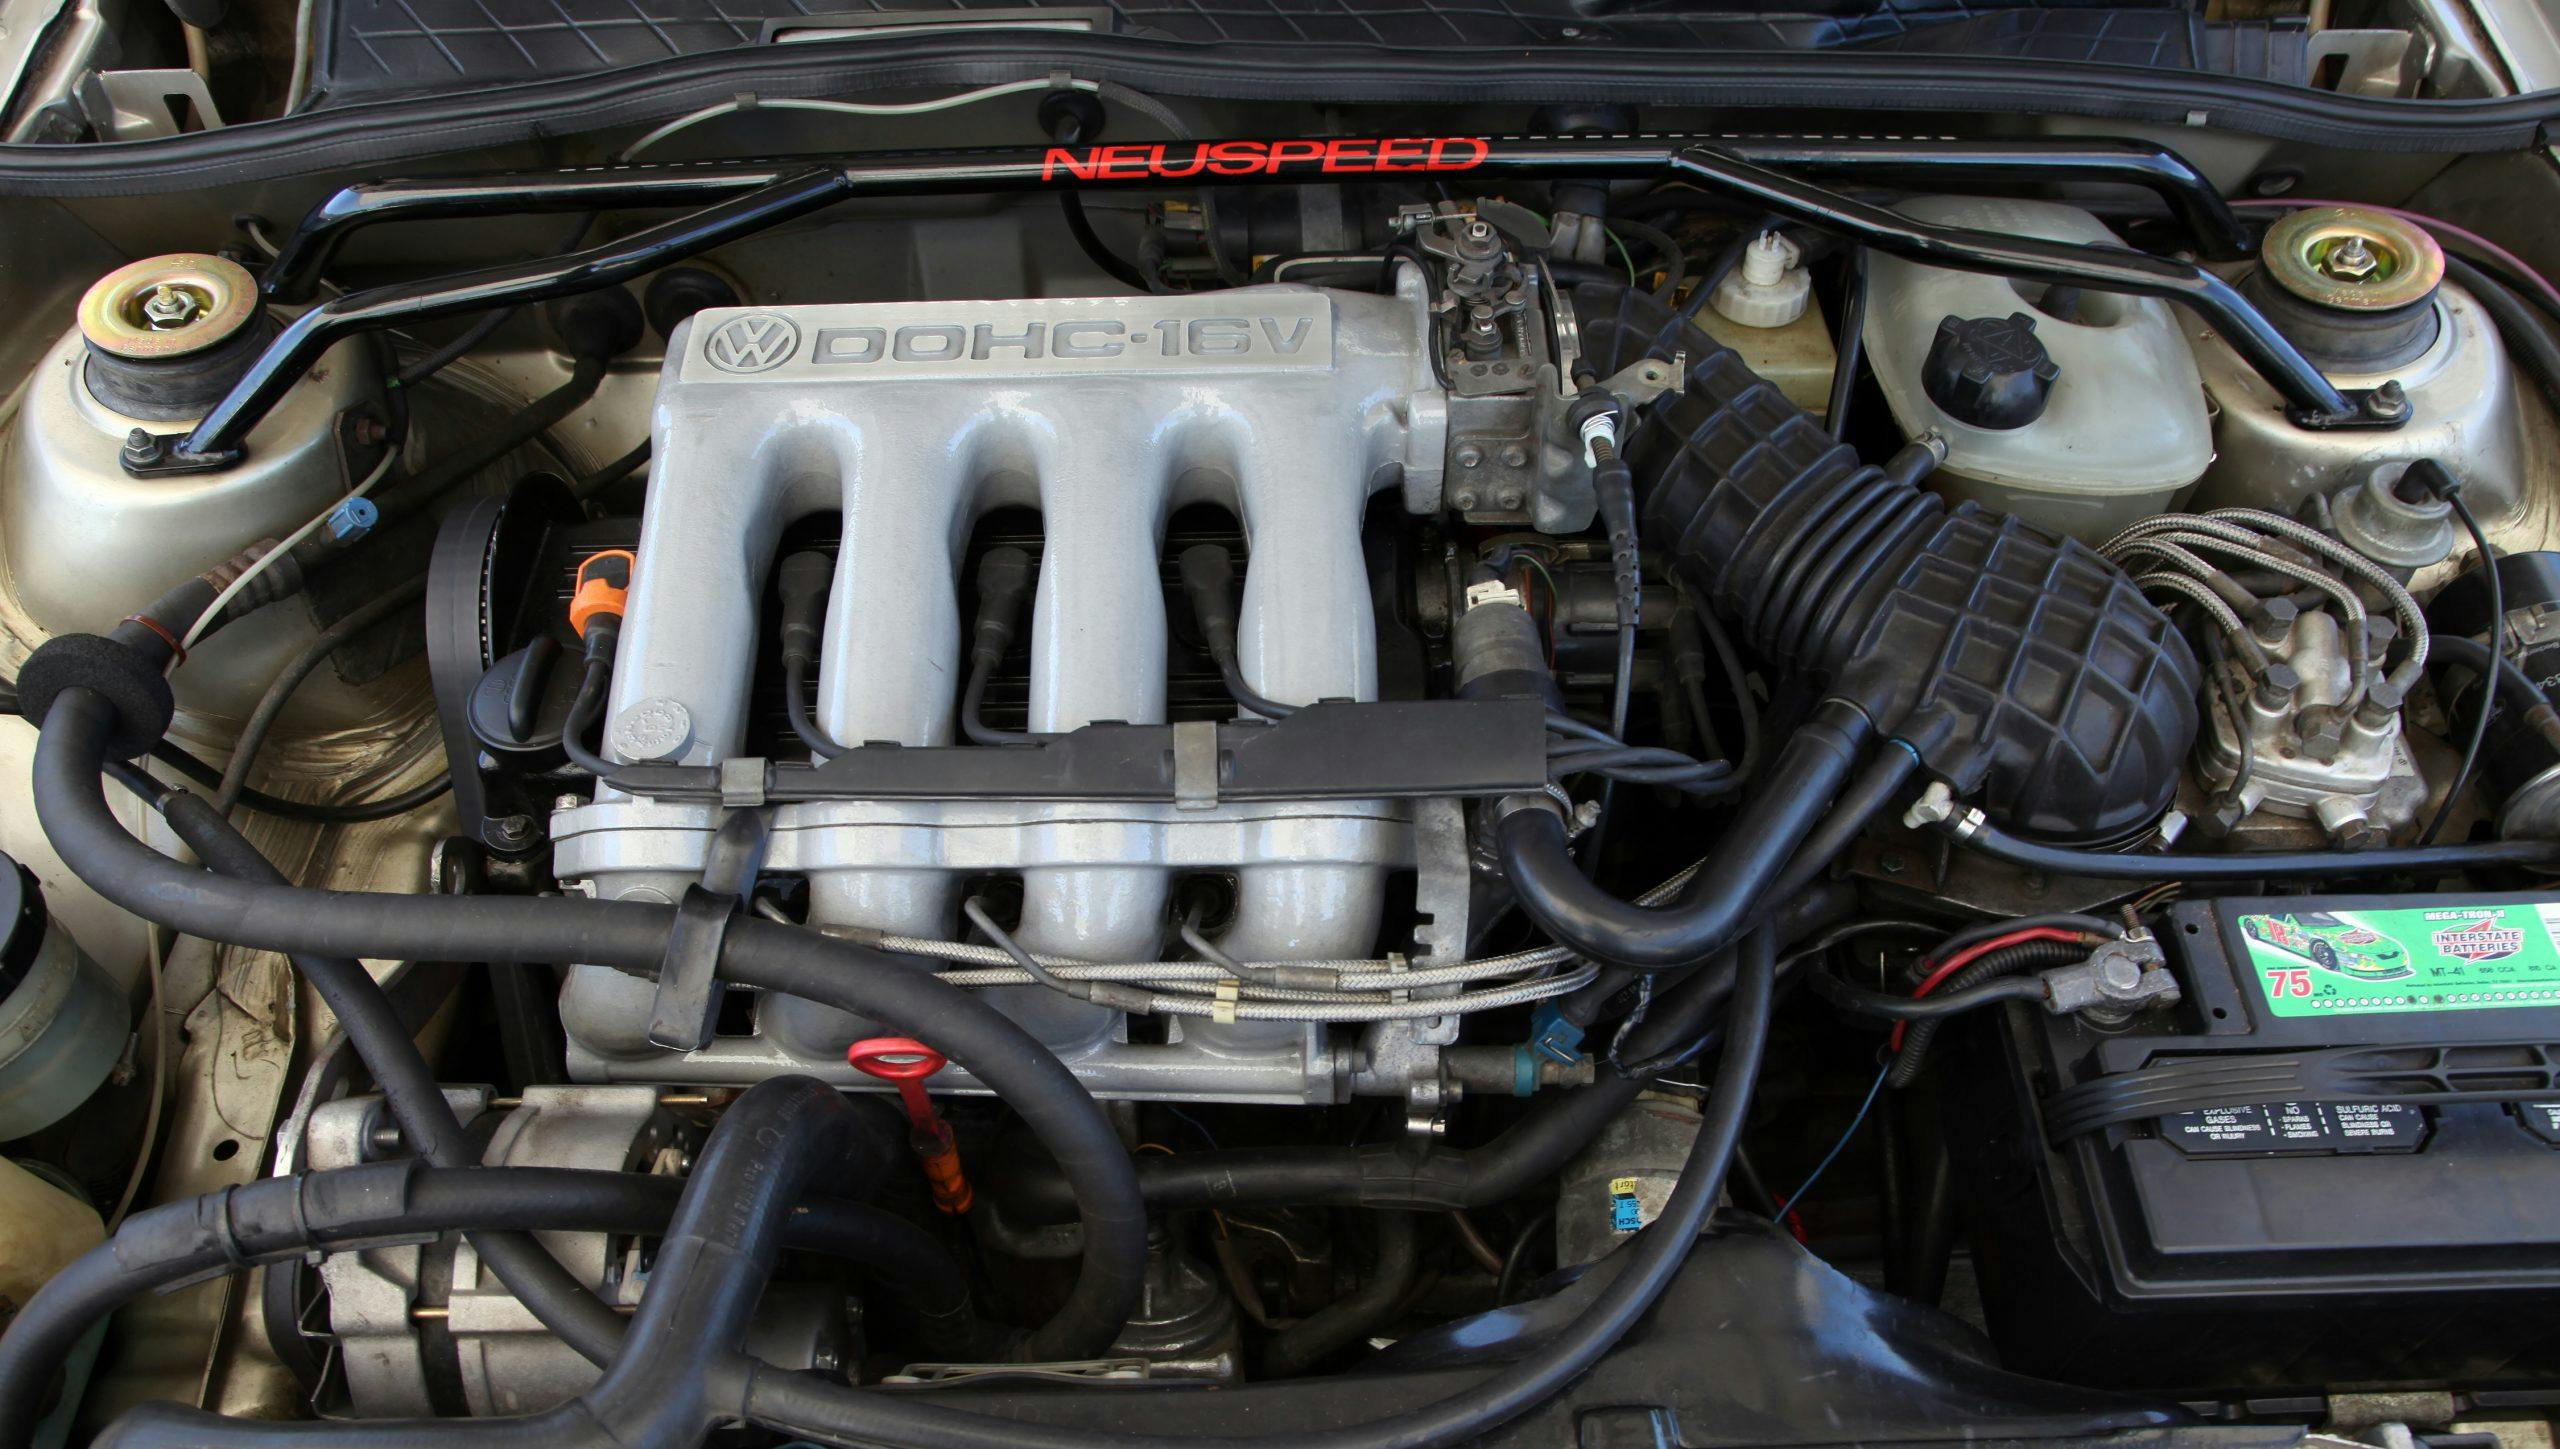 VW Scirocco engine bay